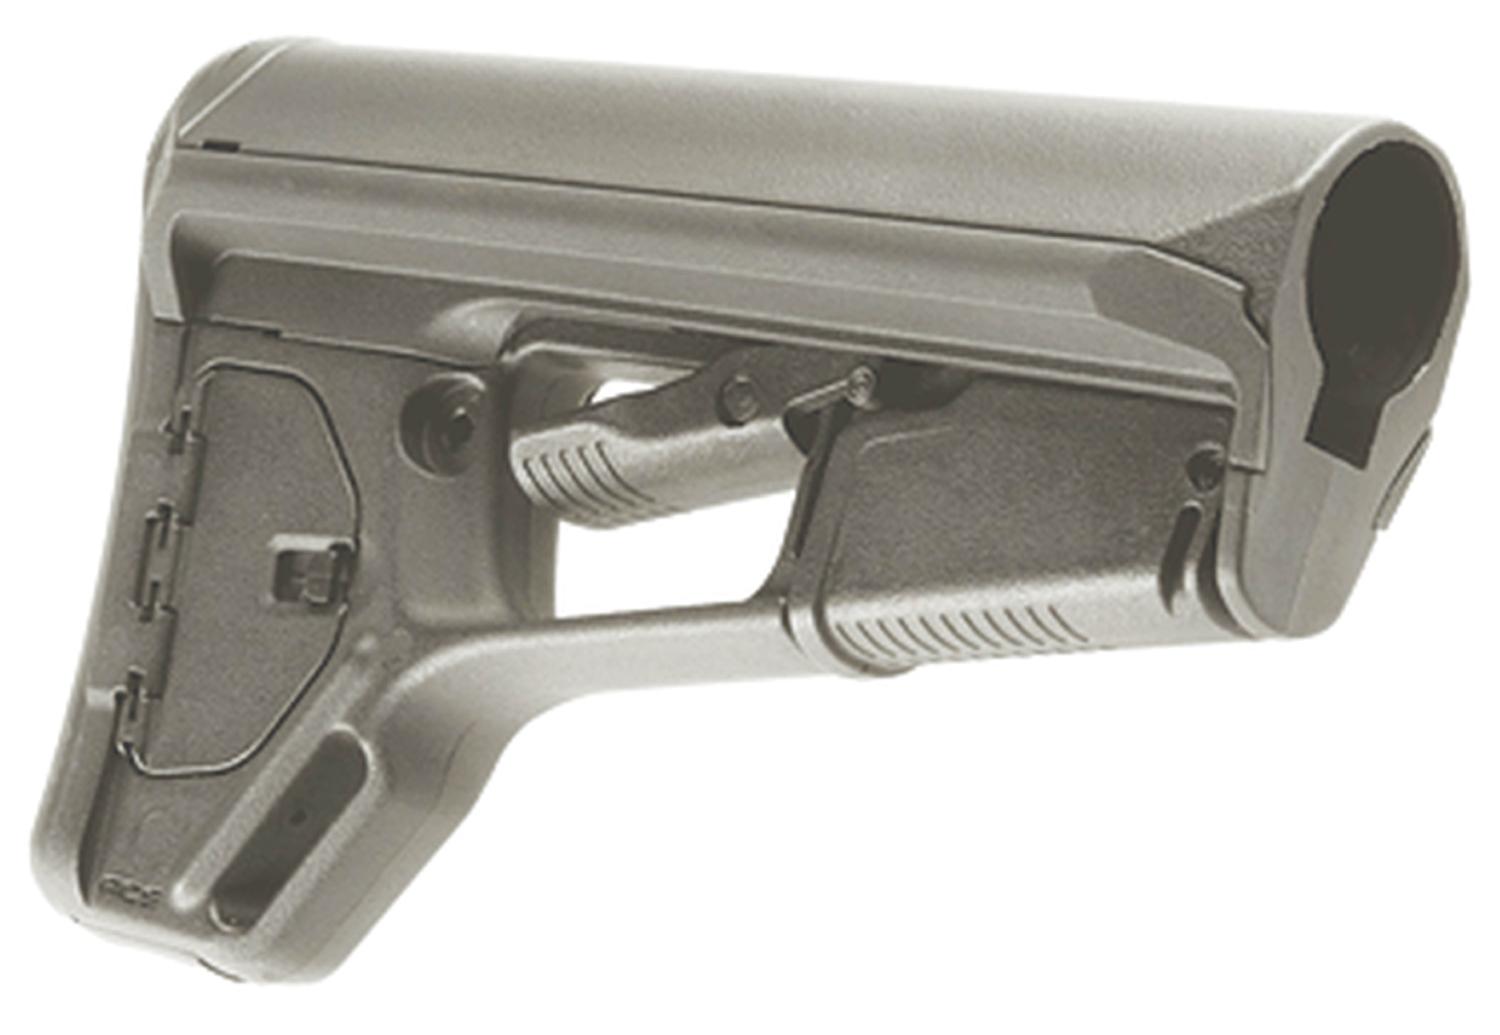  Magpul Acs- L Carbine Stock Comm- Fol